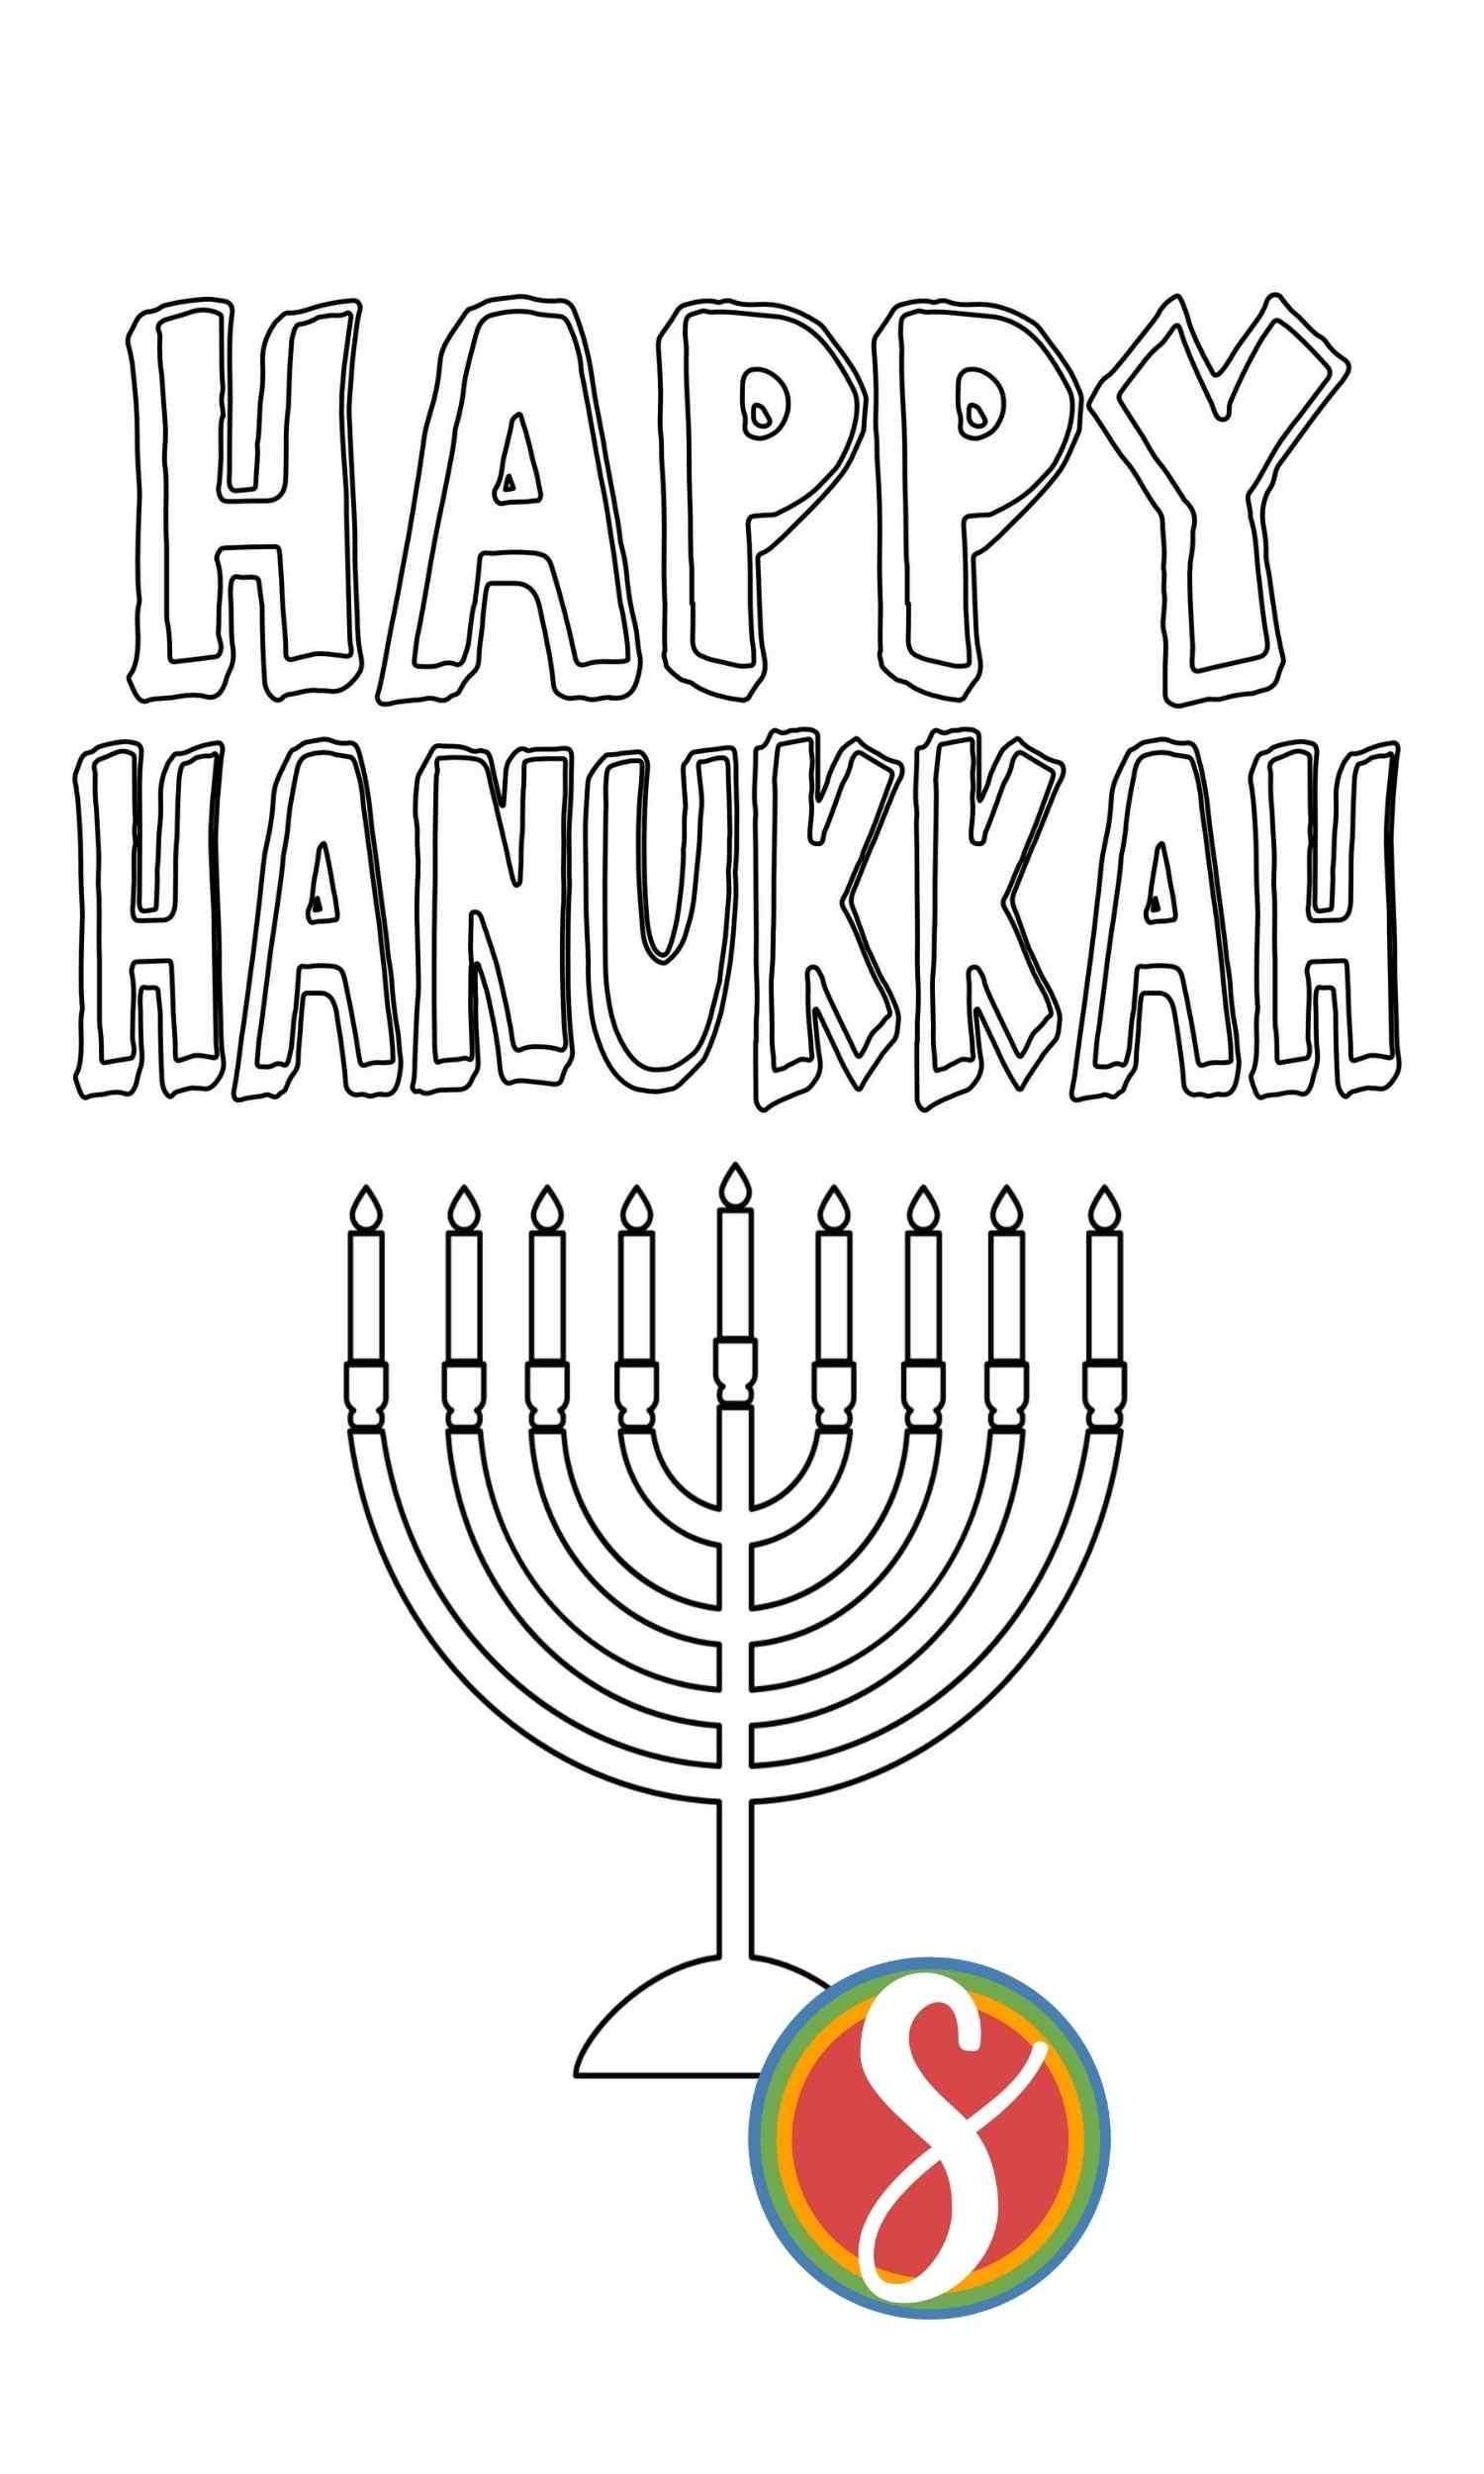 coloring page with menorah and "Happy Hanukkah"